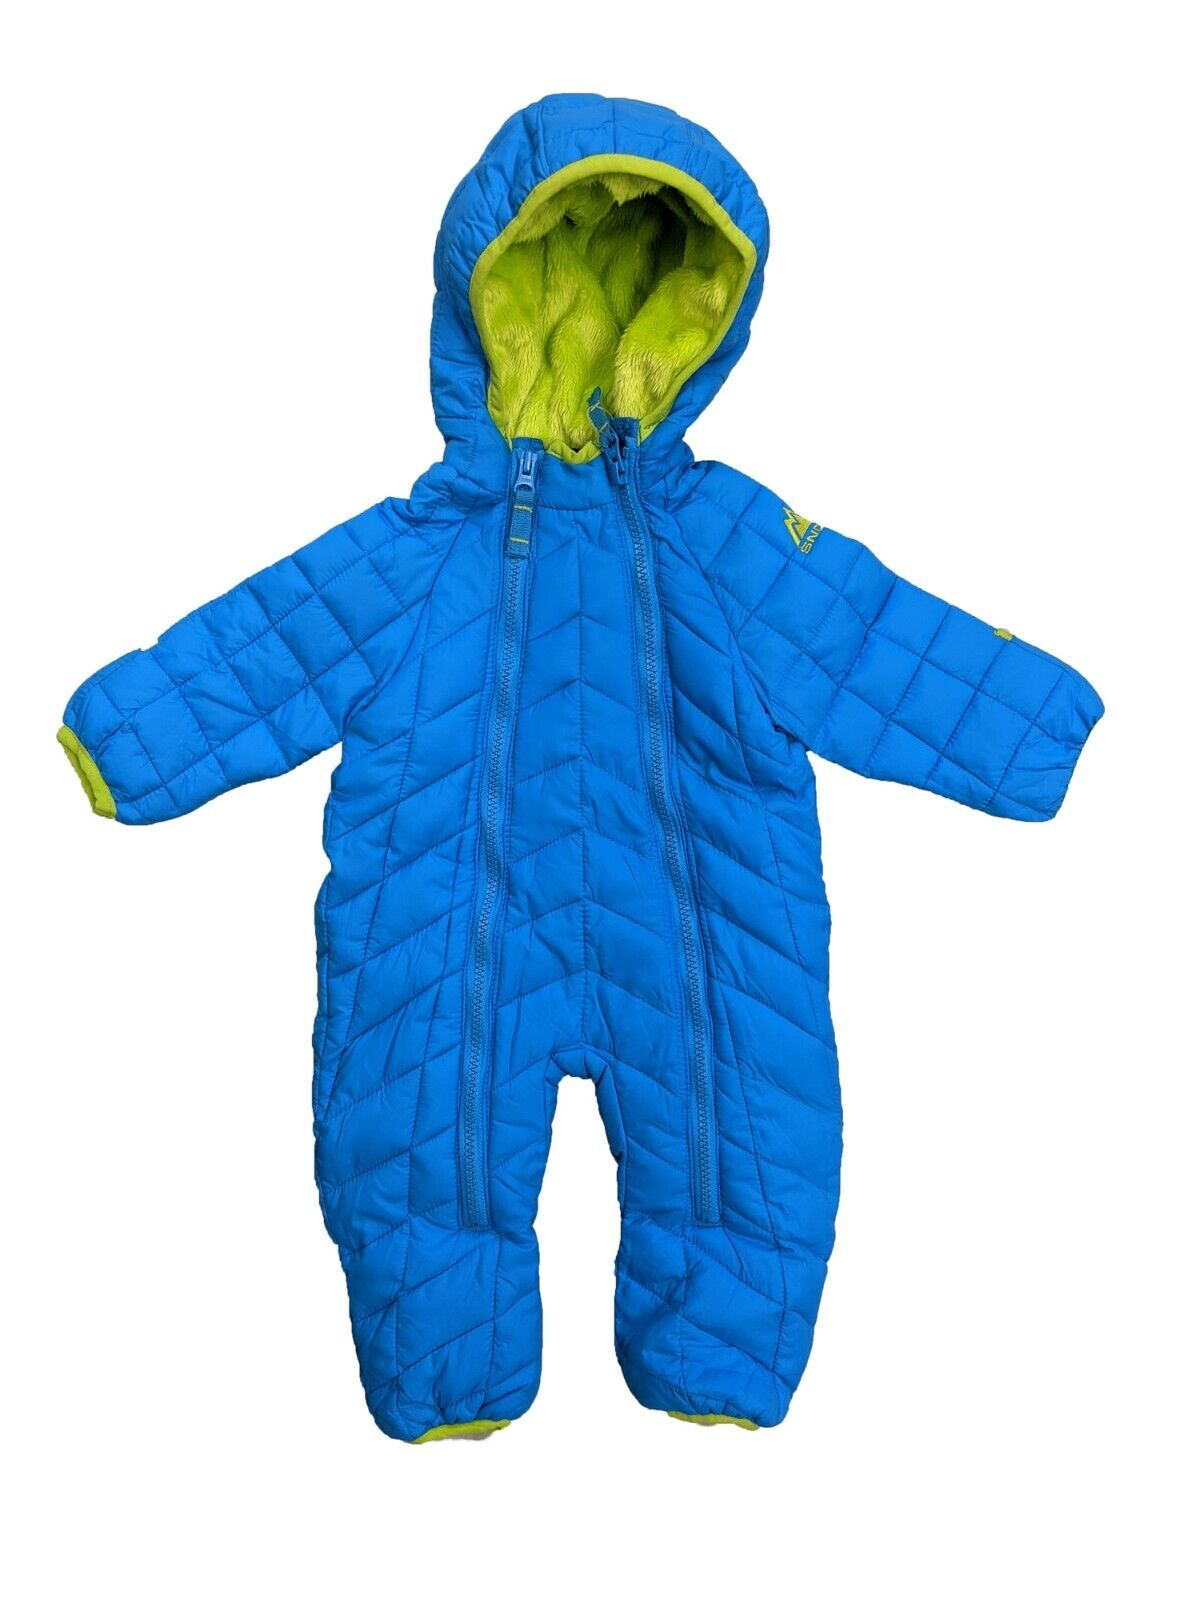 Snozu Boys Newborn/Infant 1pc Plush Lined Snowsuit Sky/Lime | eBay